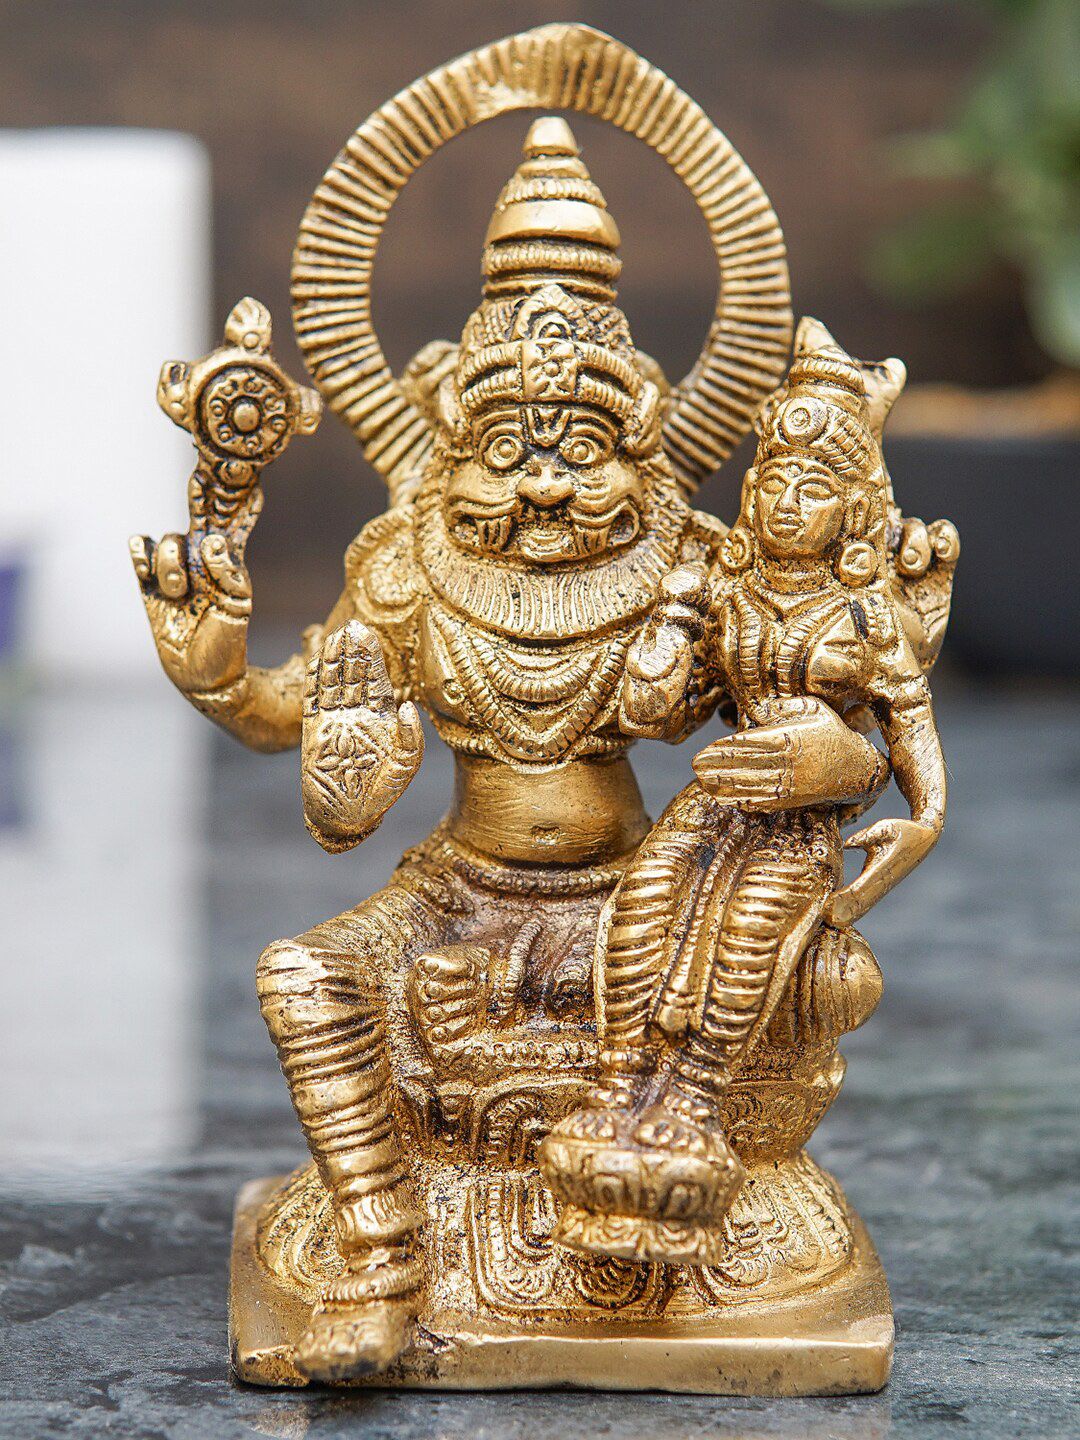 StatueStudio Gold-Toned Laxmi Idol Showpiece Price in India